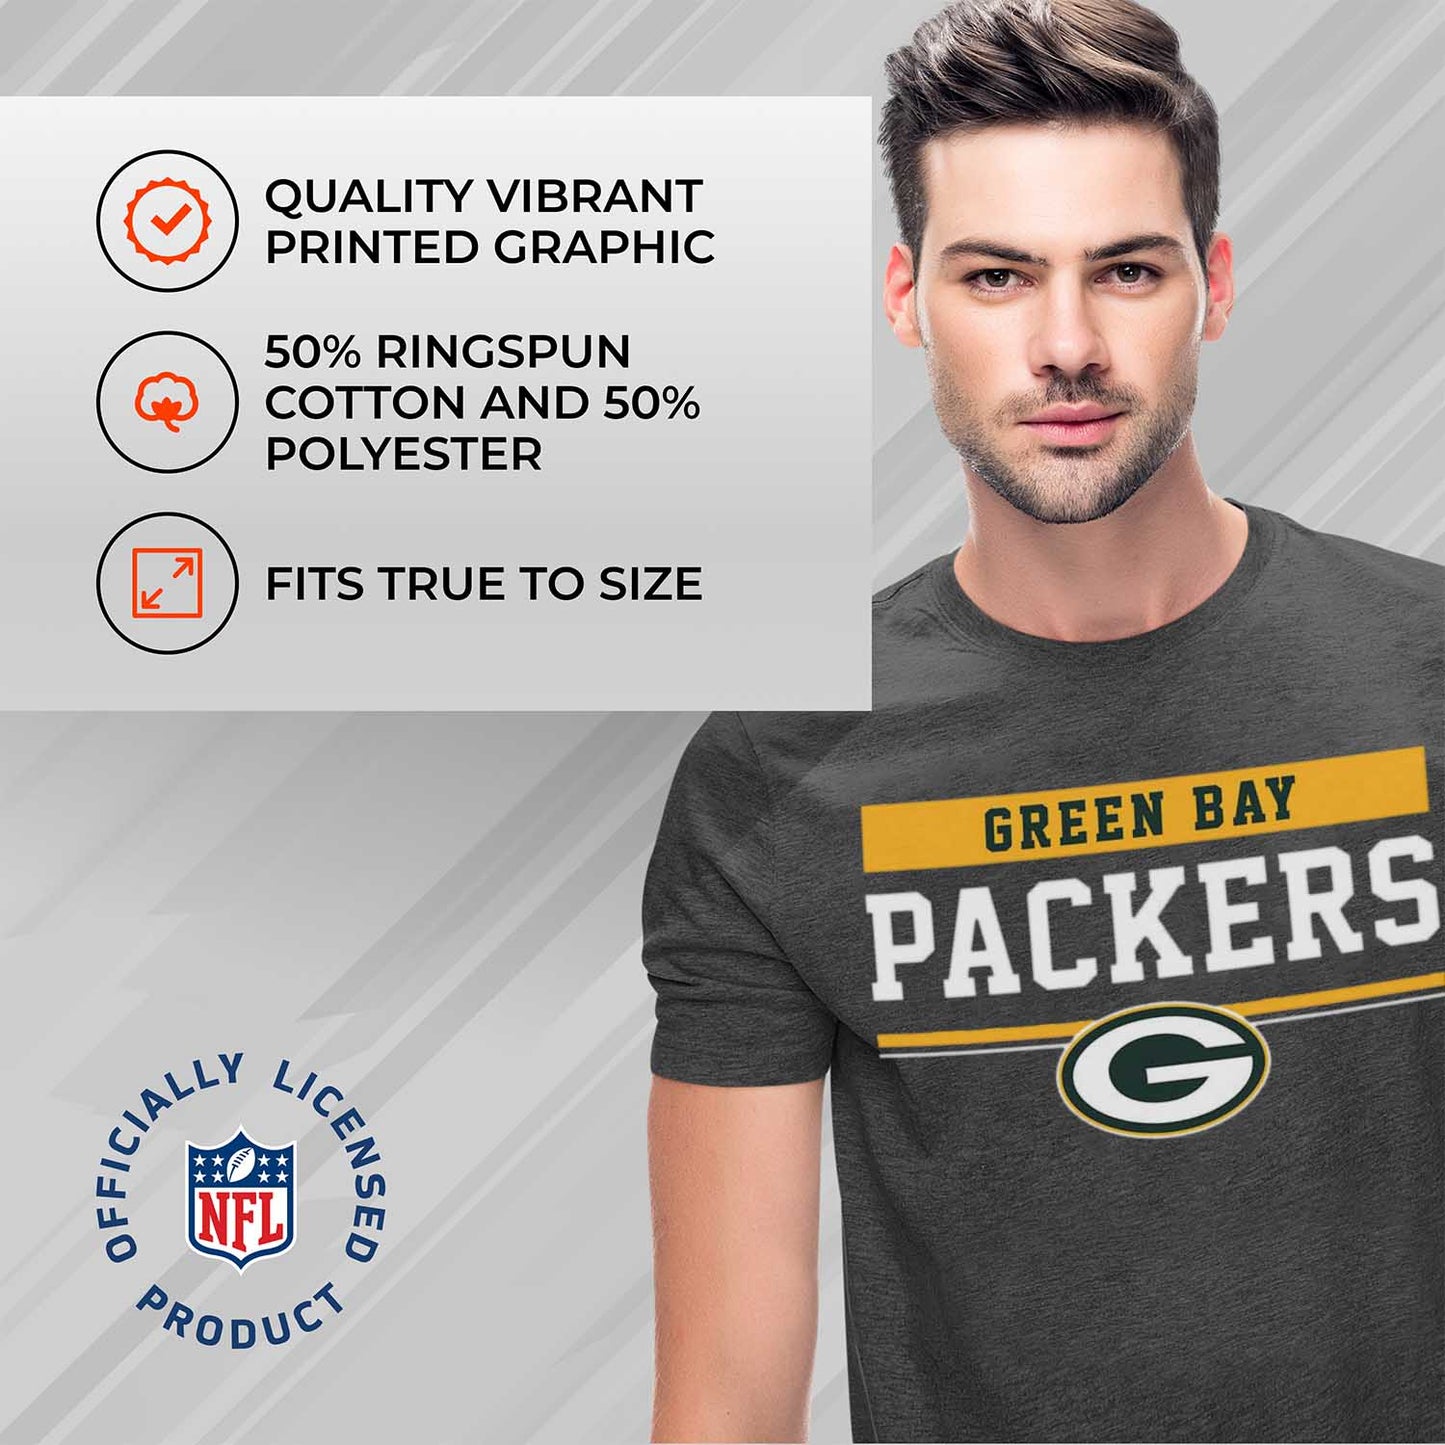 Green Bay Packers NFL Adult Team Block Tagless T-Shirt - Charcoal